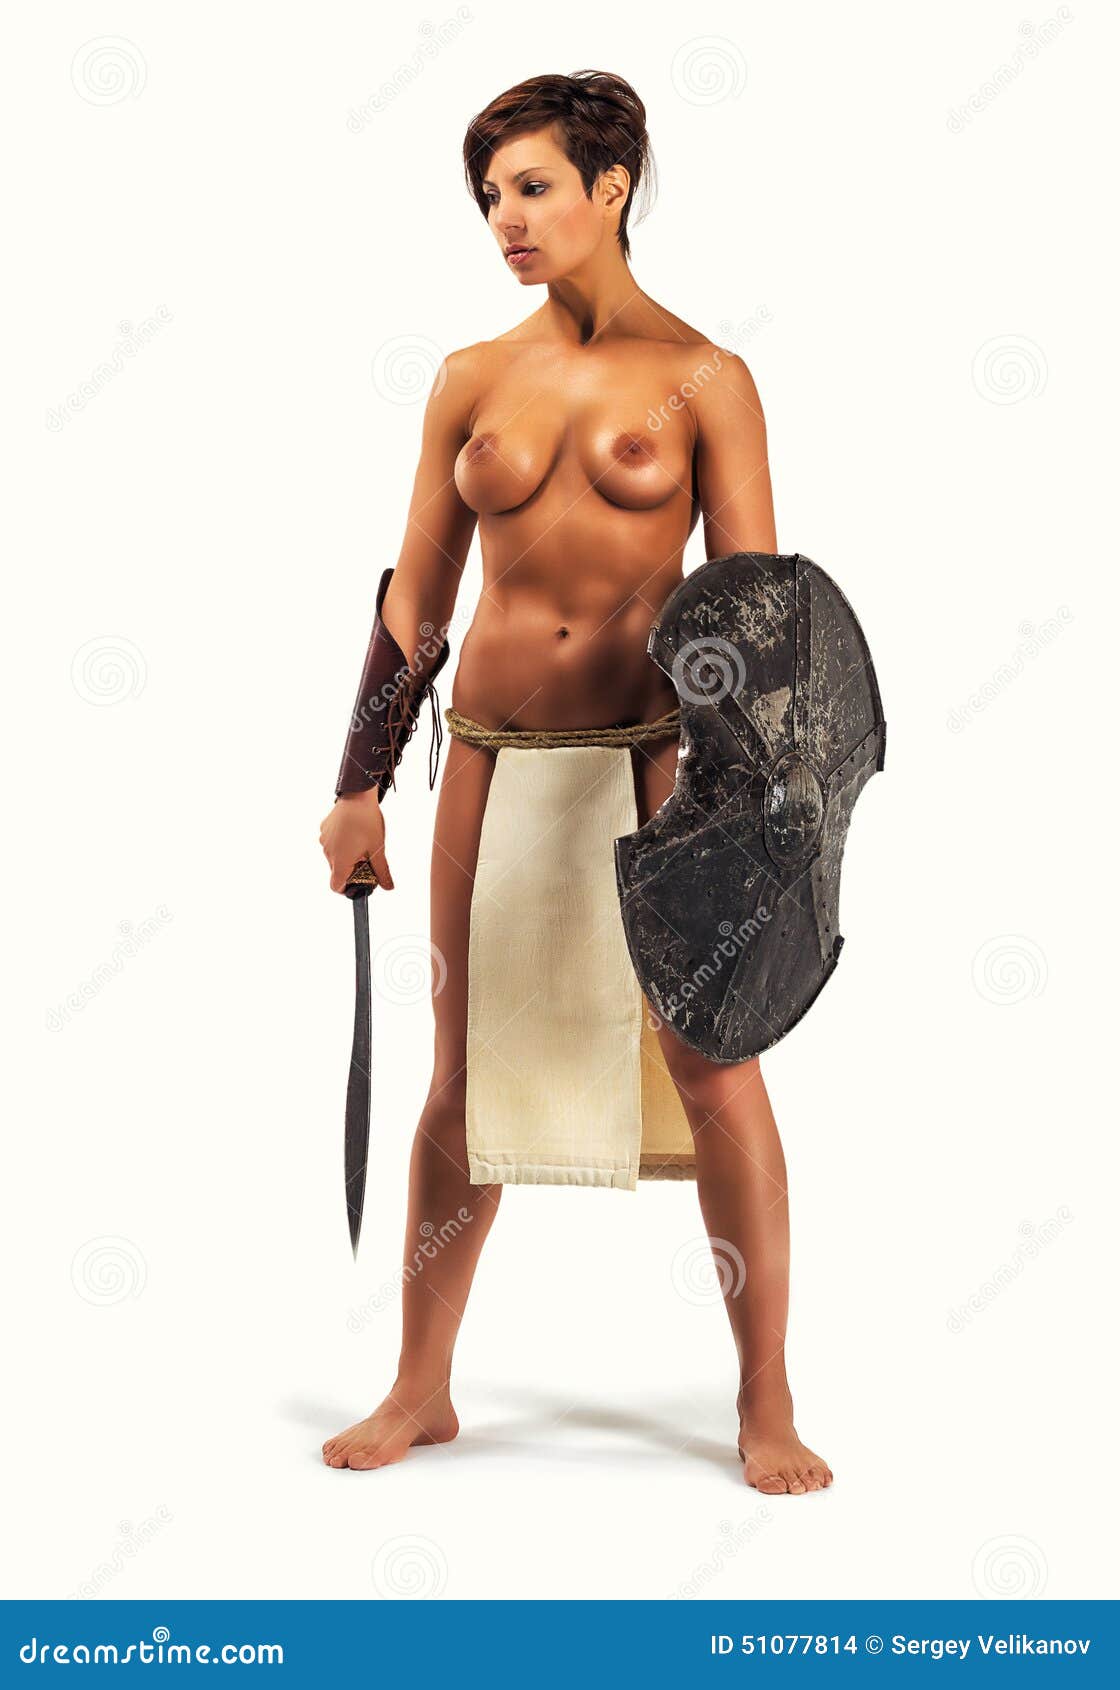 Naked woman warriors pics naked scene